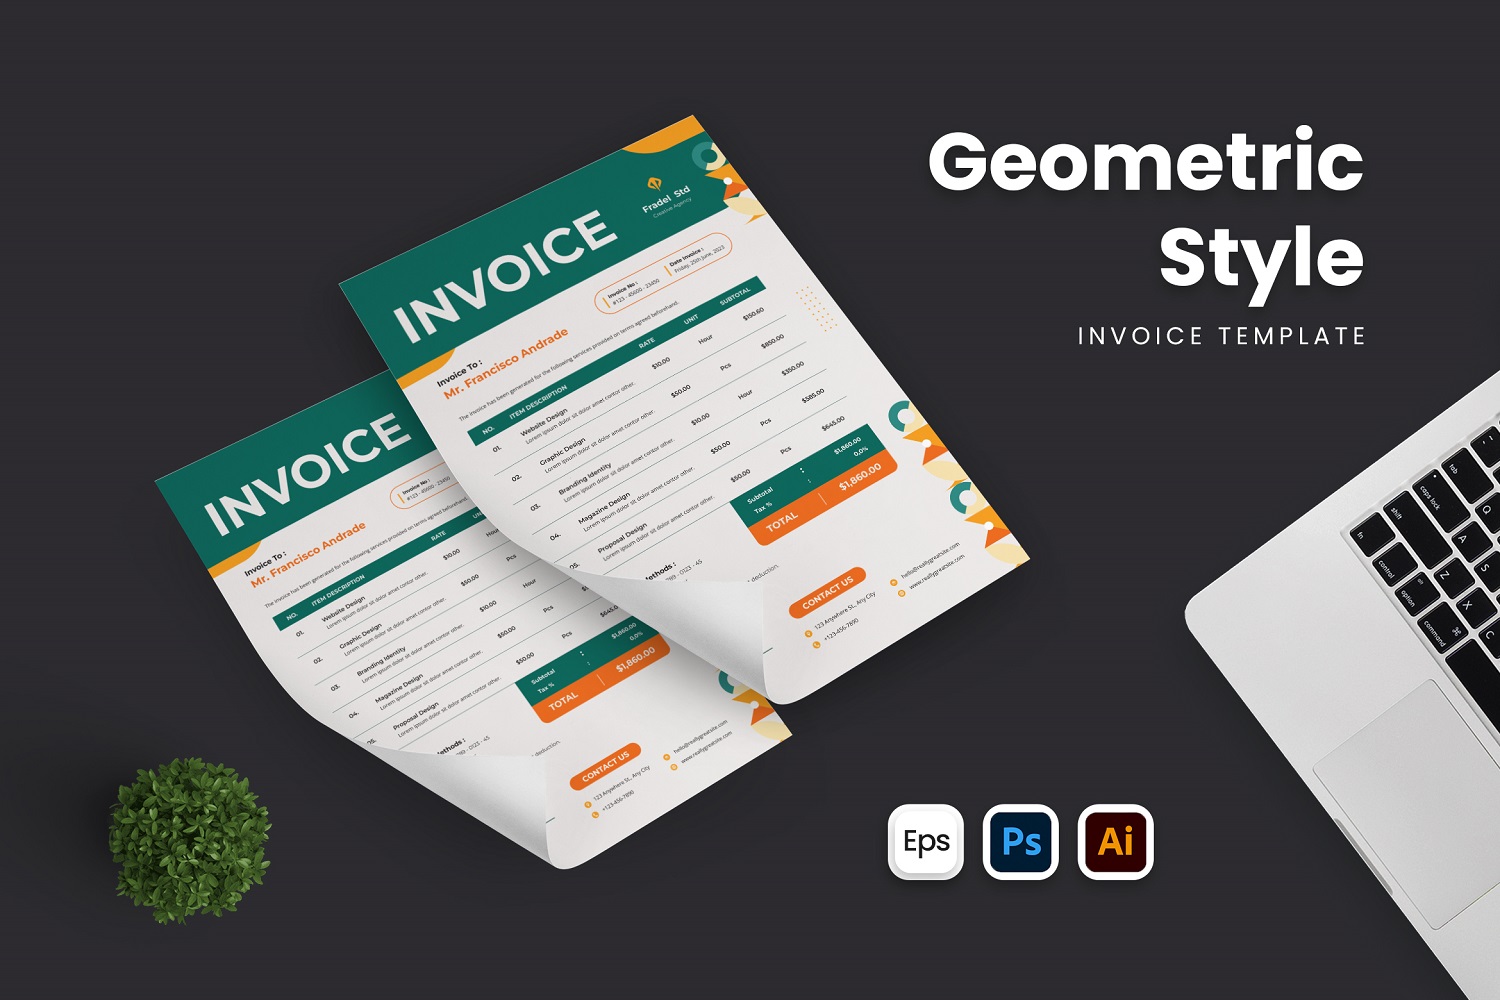 Geometric Style Invoice Template